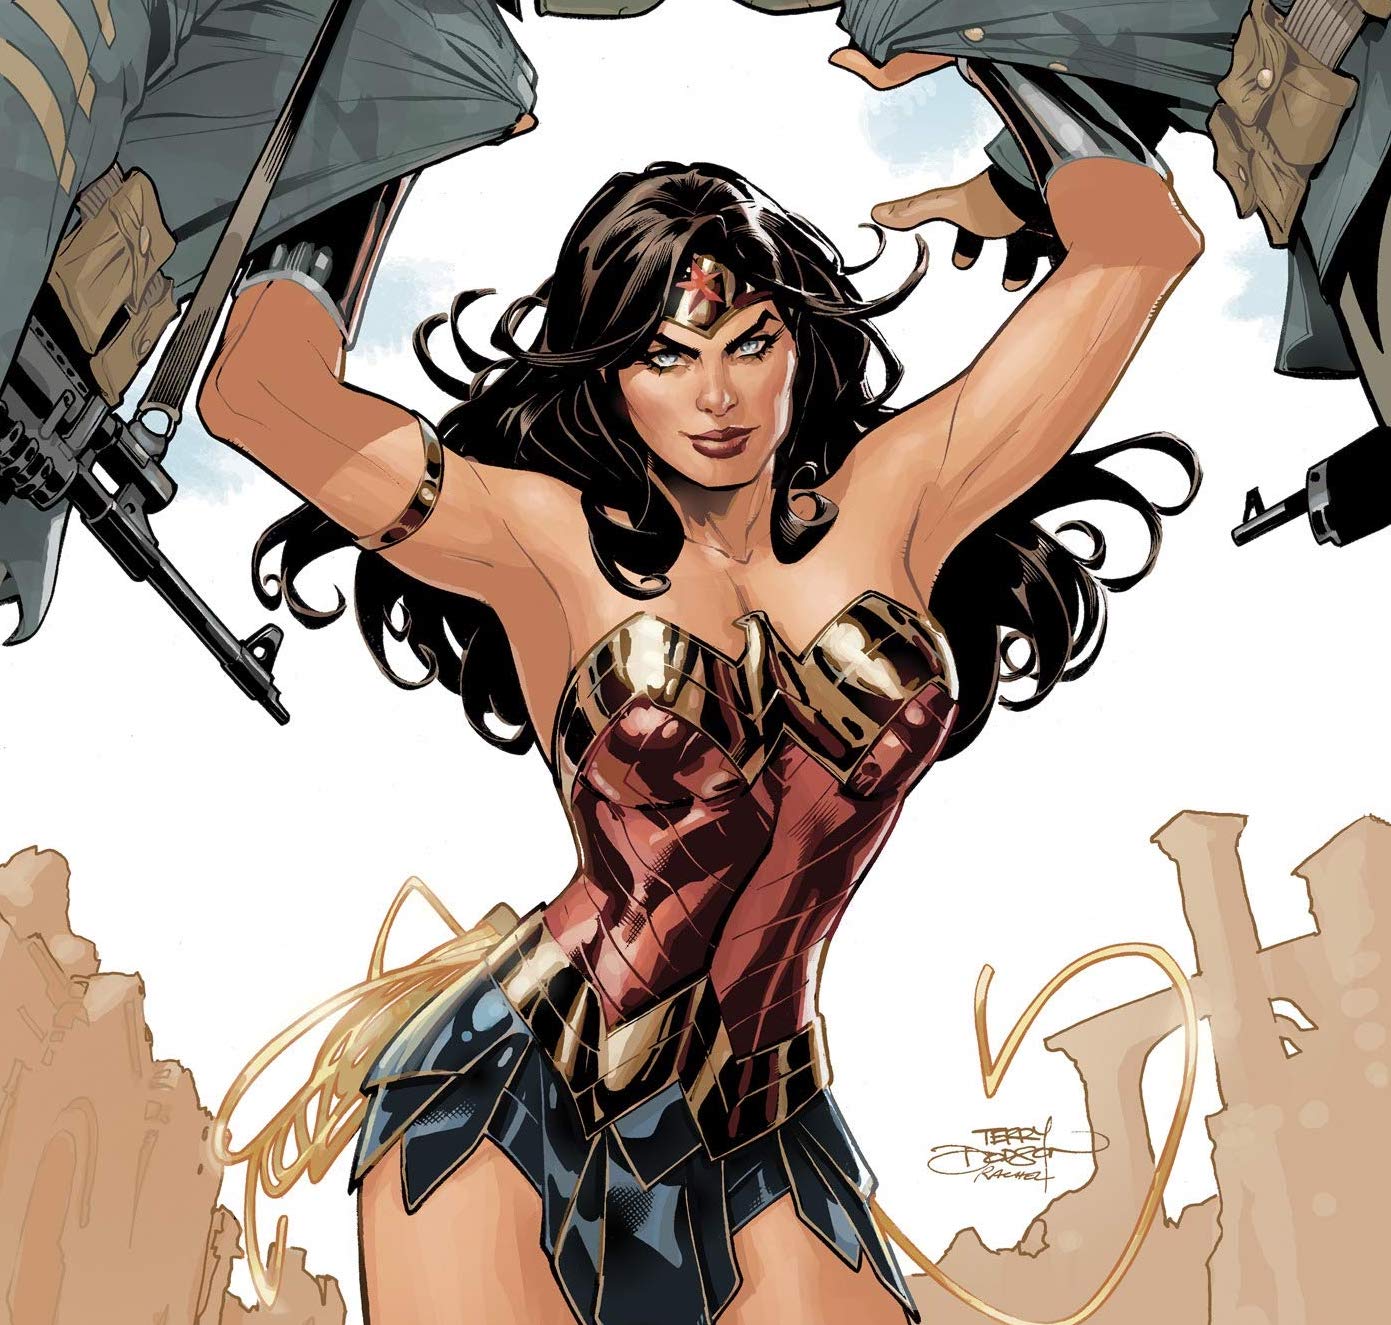 Wonder Woman Vol. 1: The Just War Review